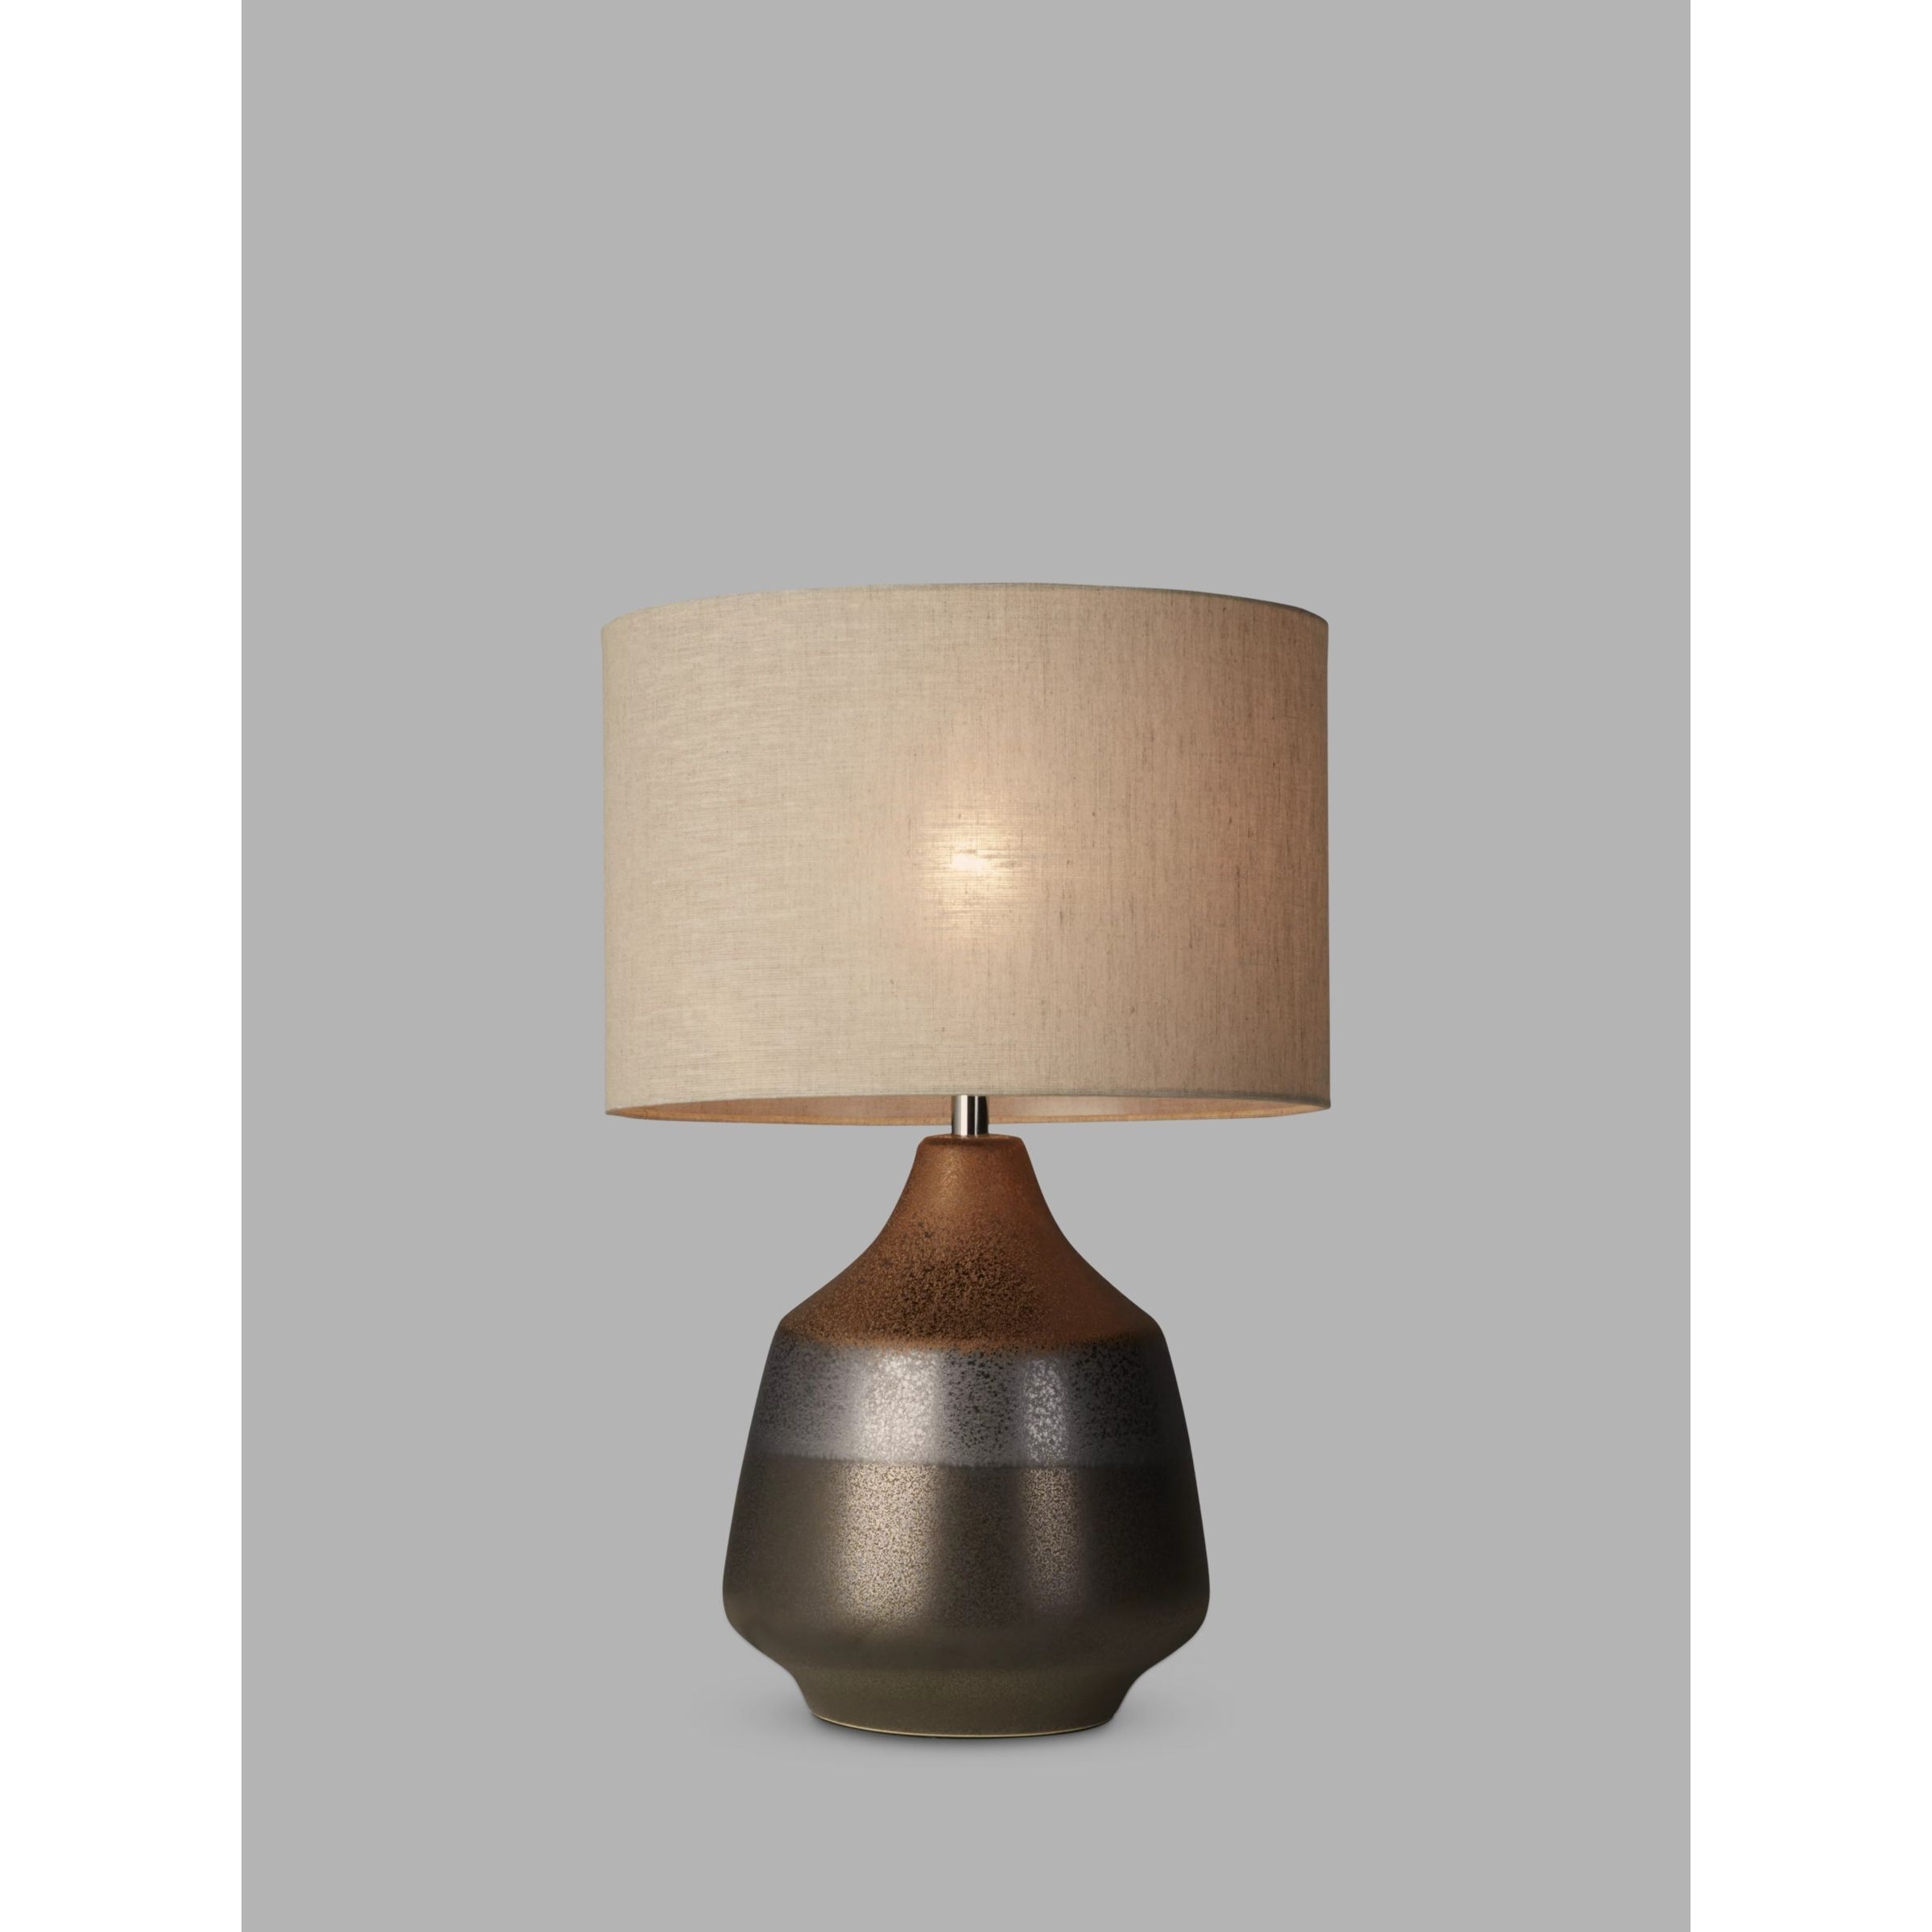 John Lewis Delaney Ceramic Table Lamp, Bronze Glaze - image 1